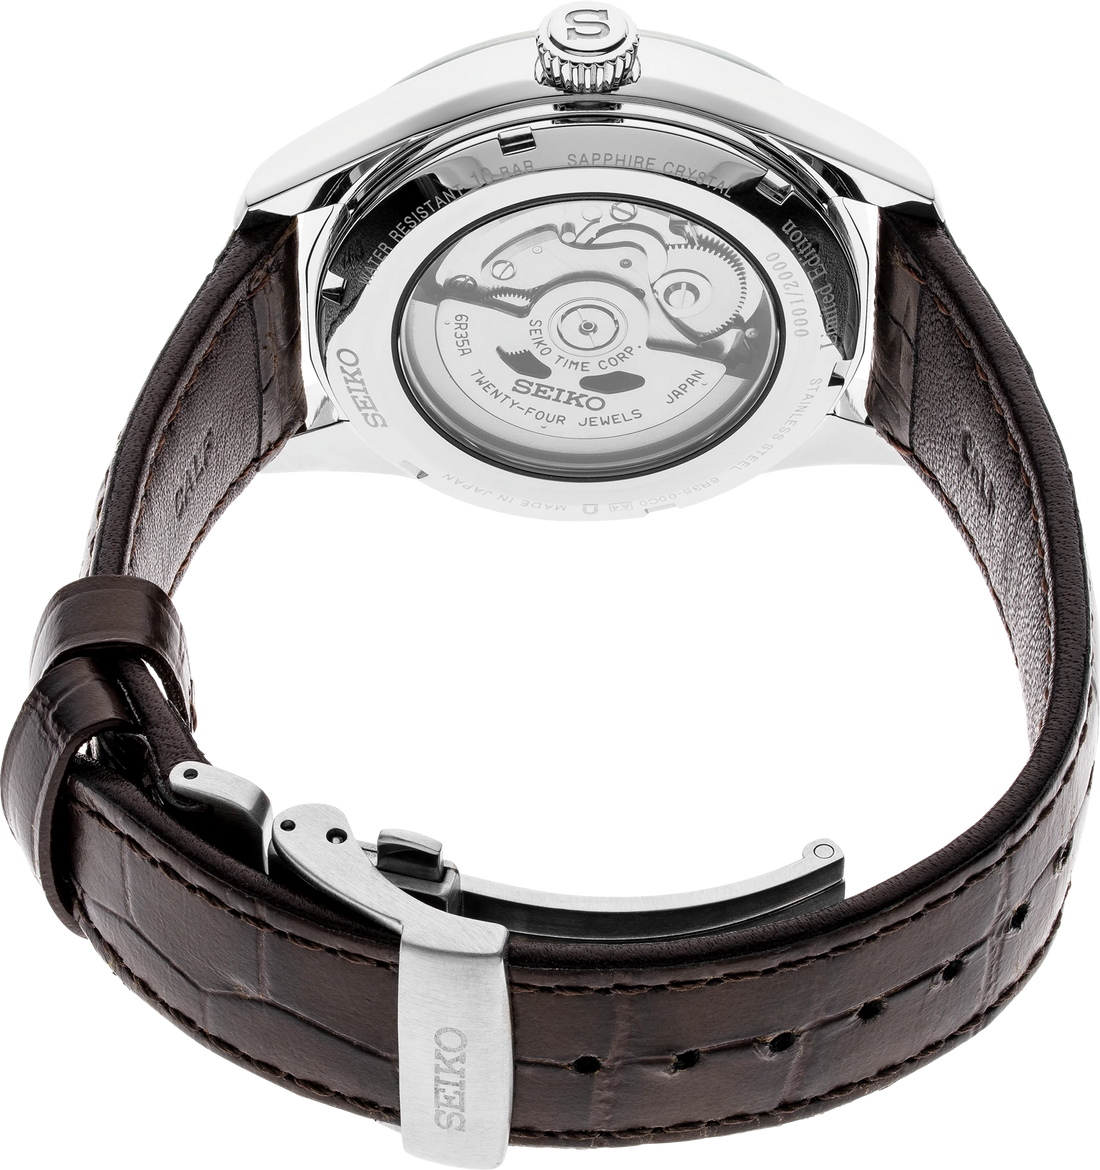 Seiko Presage SPB111 Enamel Green Dial Limited Edition Watch